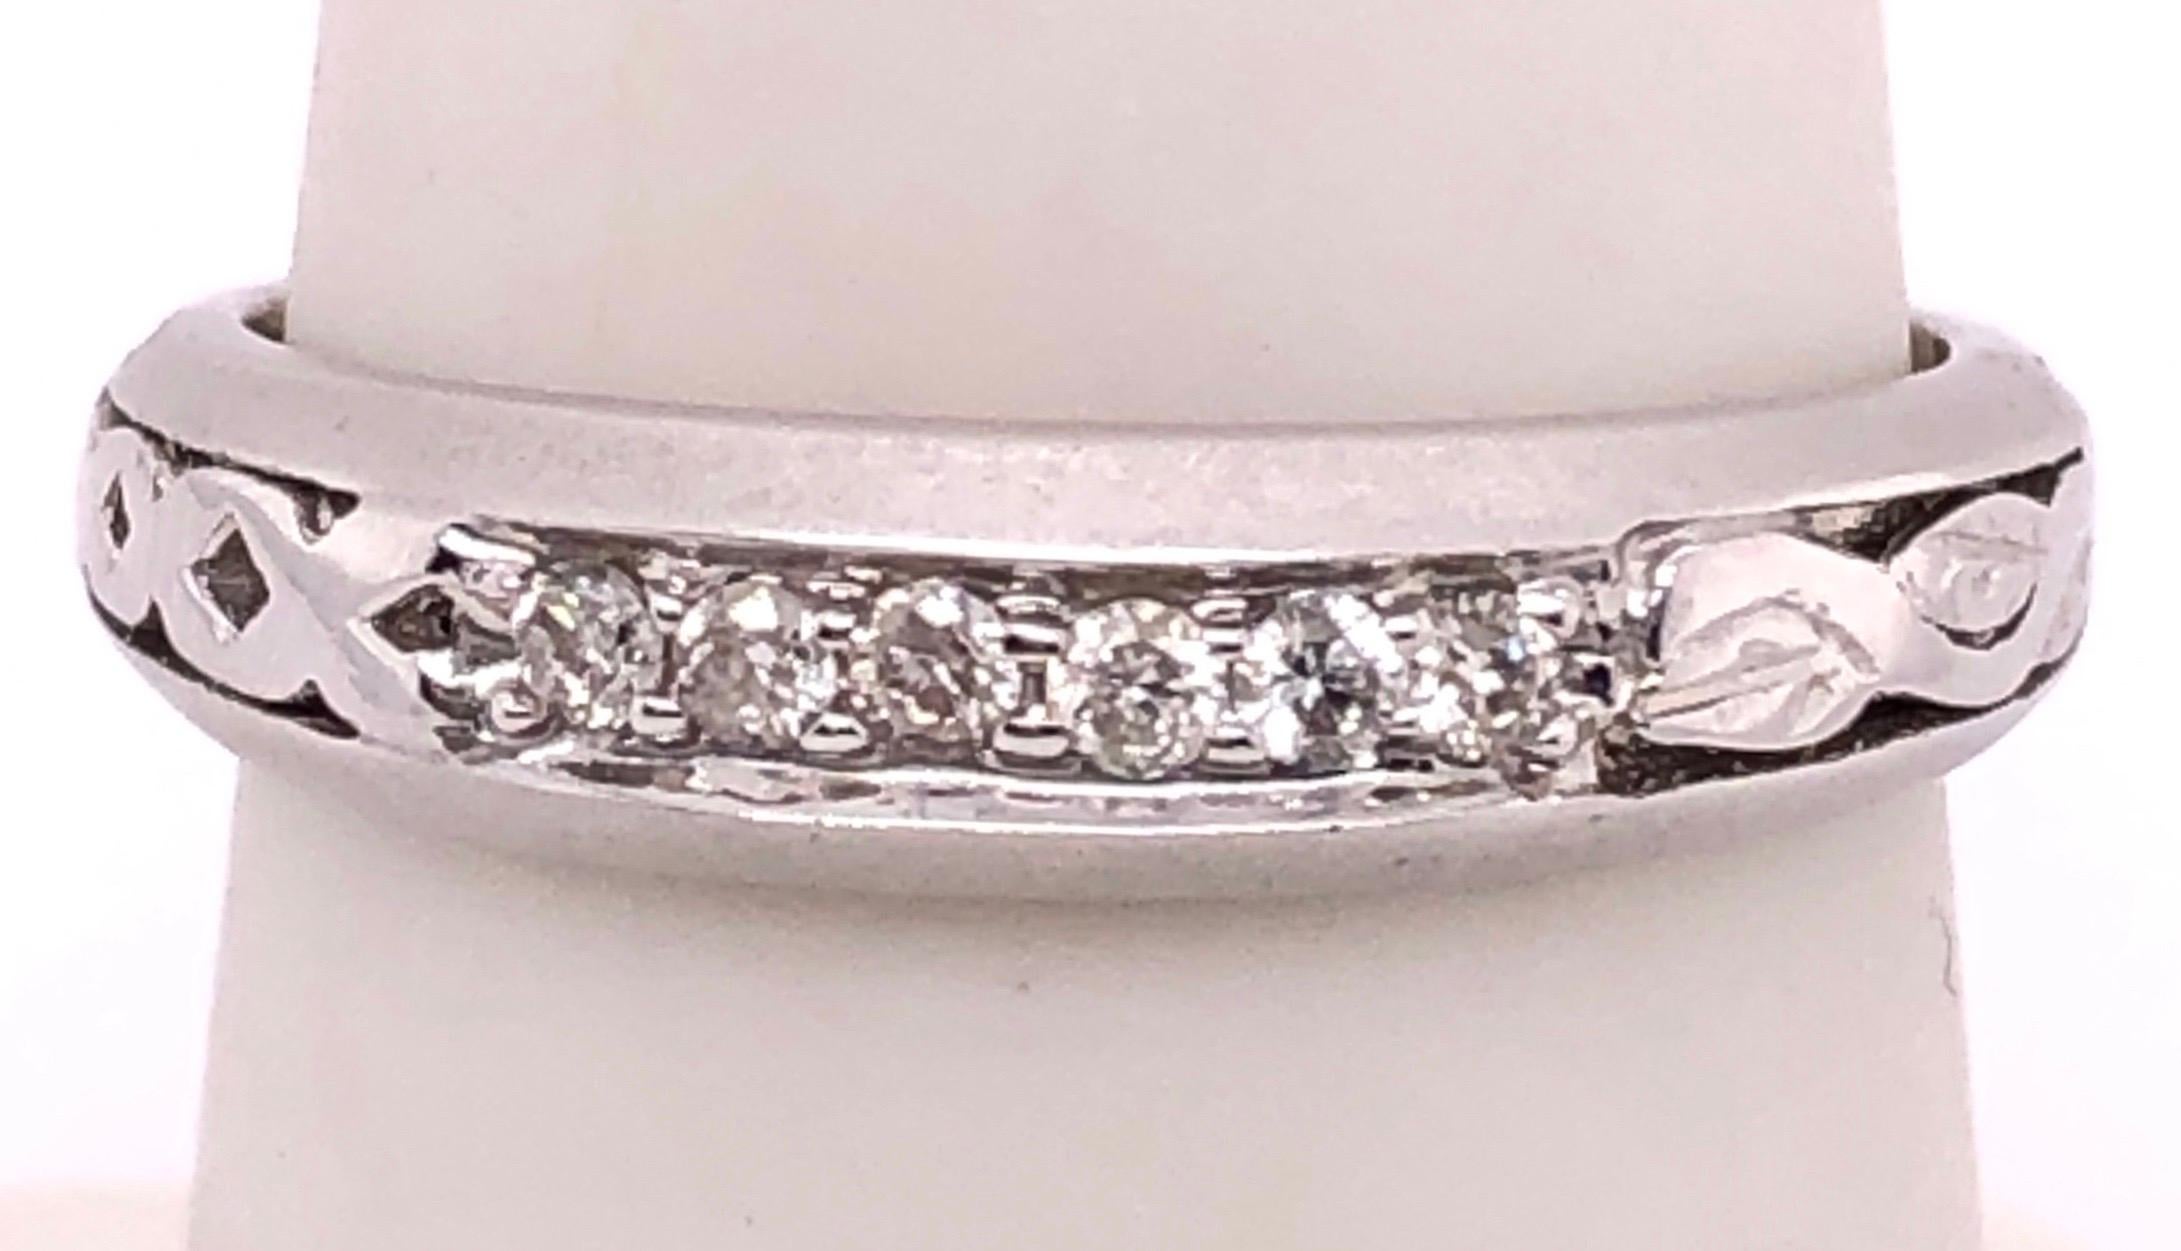 18 Karat White Gold Fashion Ring with Diamonds.
Size 6.5
3.1 grams total weight.